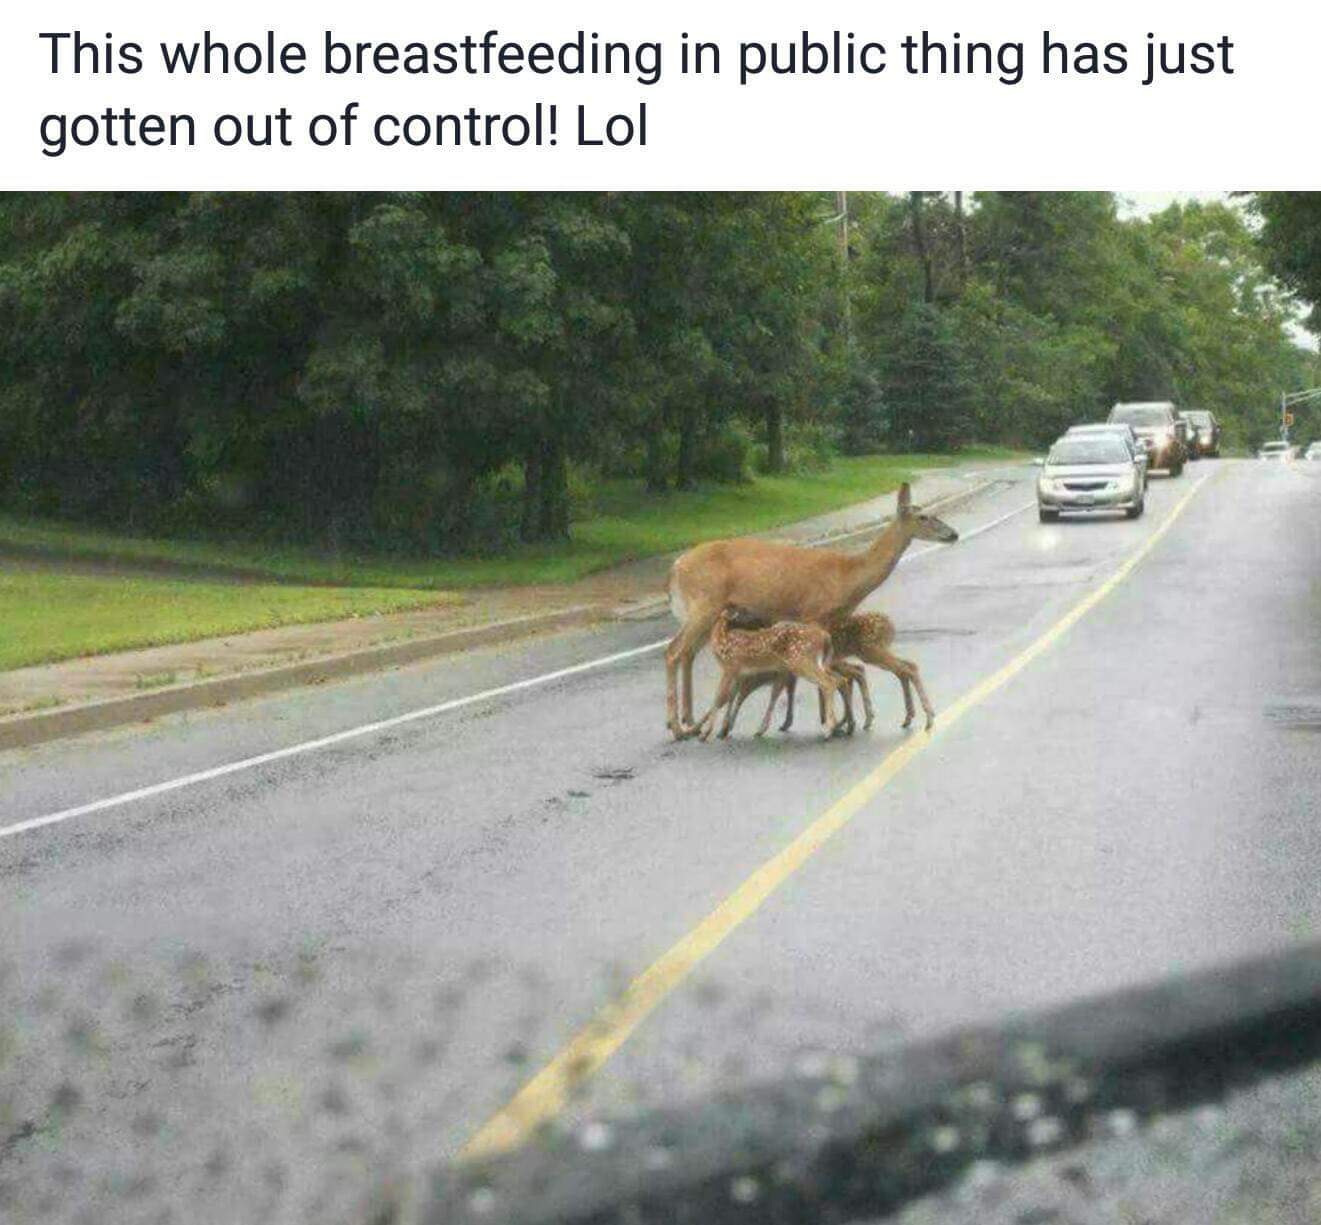 When breastfeeding in public goes too far.